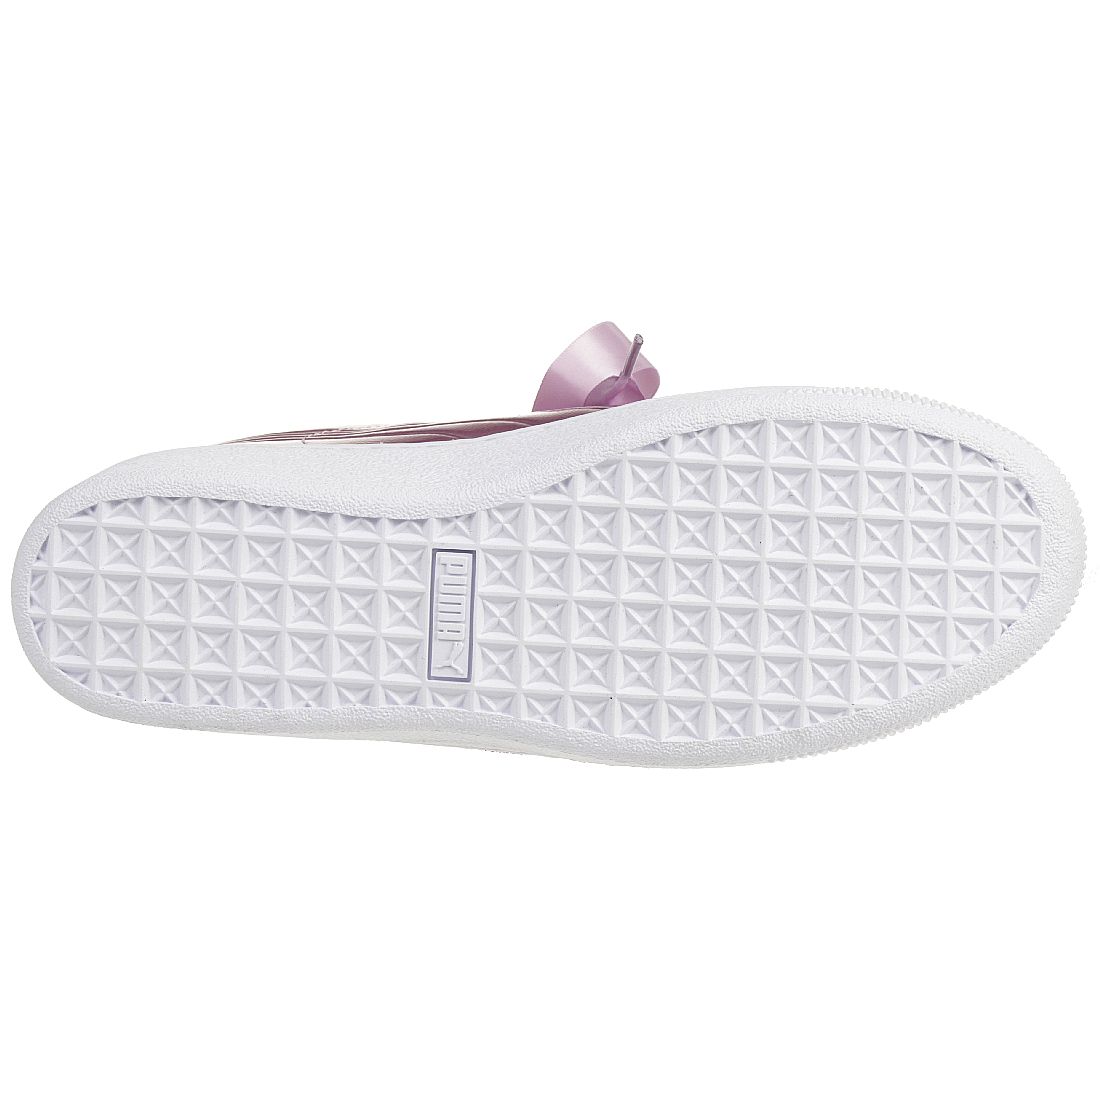 Puma Vikky Platform Ribbon P Sneaker Damen Schuhe 366419 04 pink